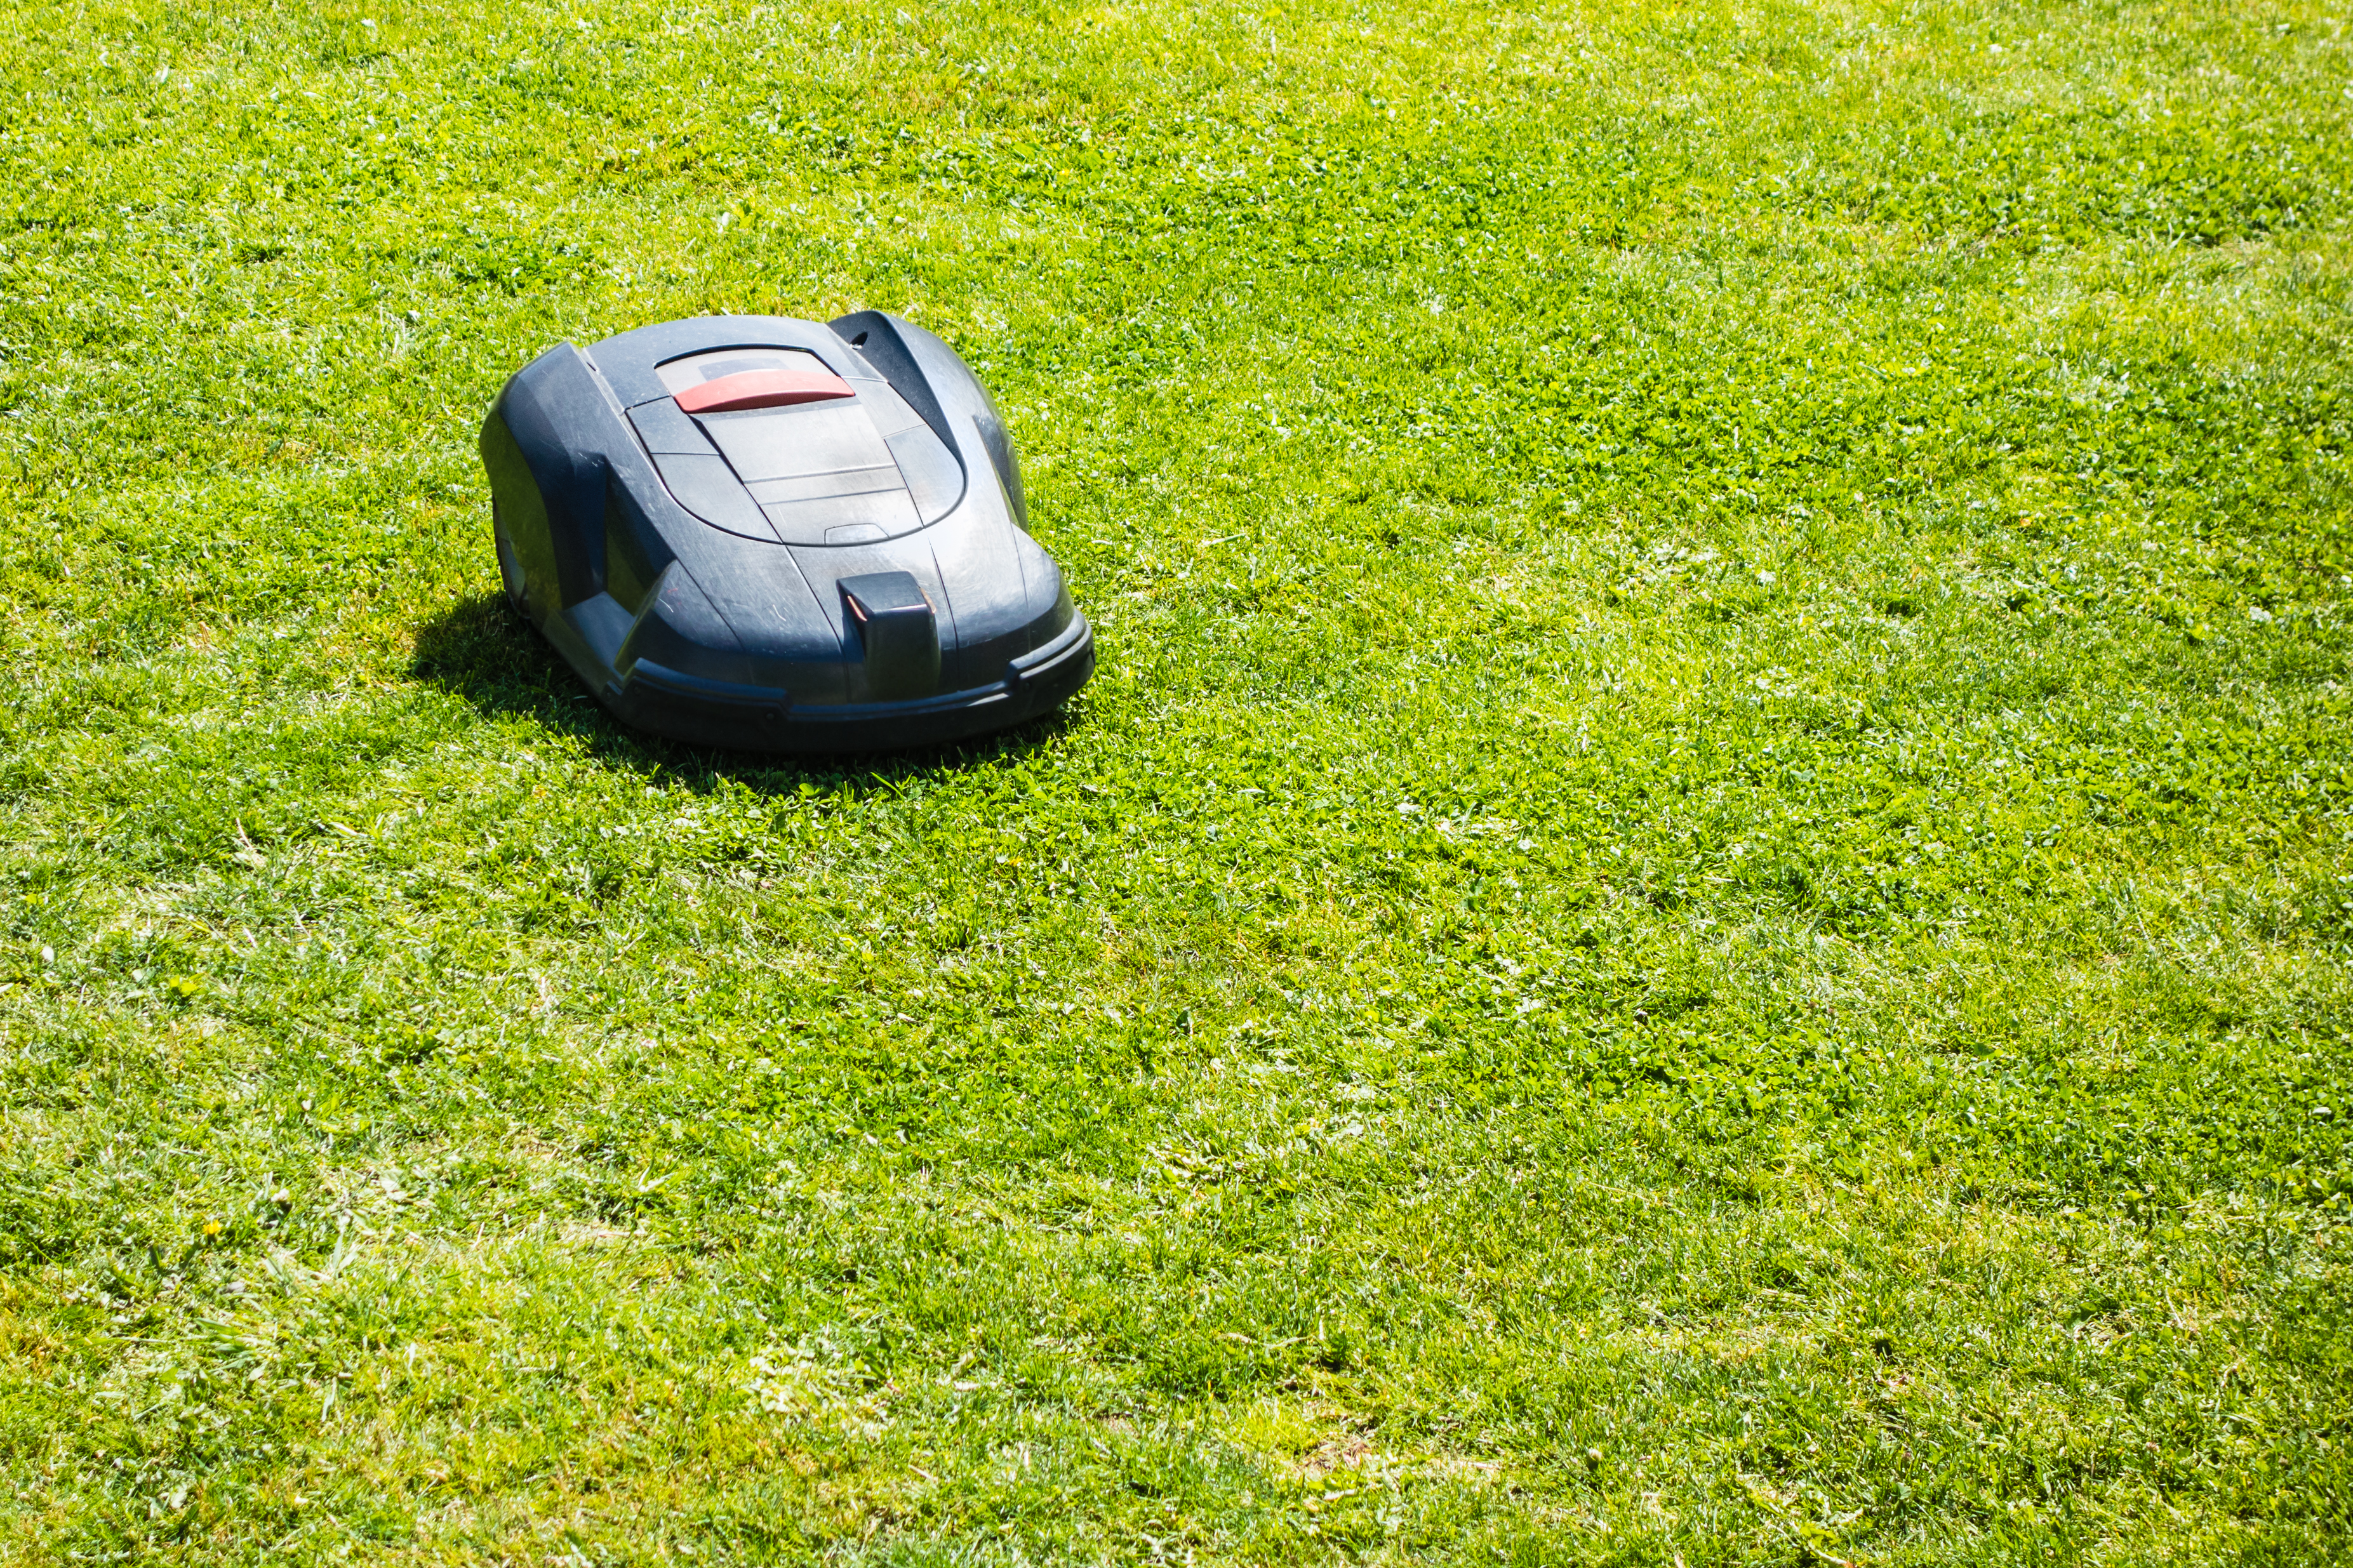 a robotic lawn mower working on a green grass field